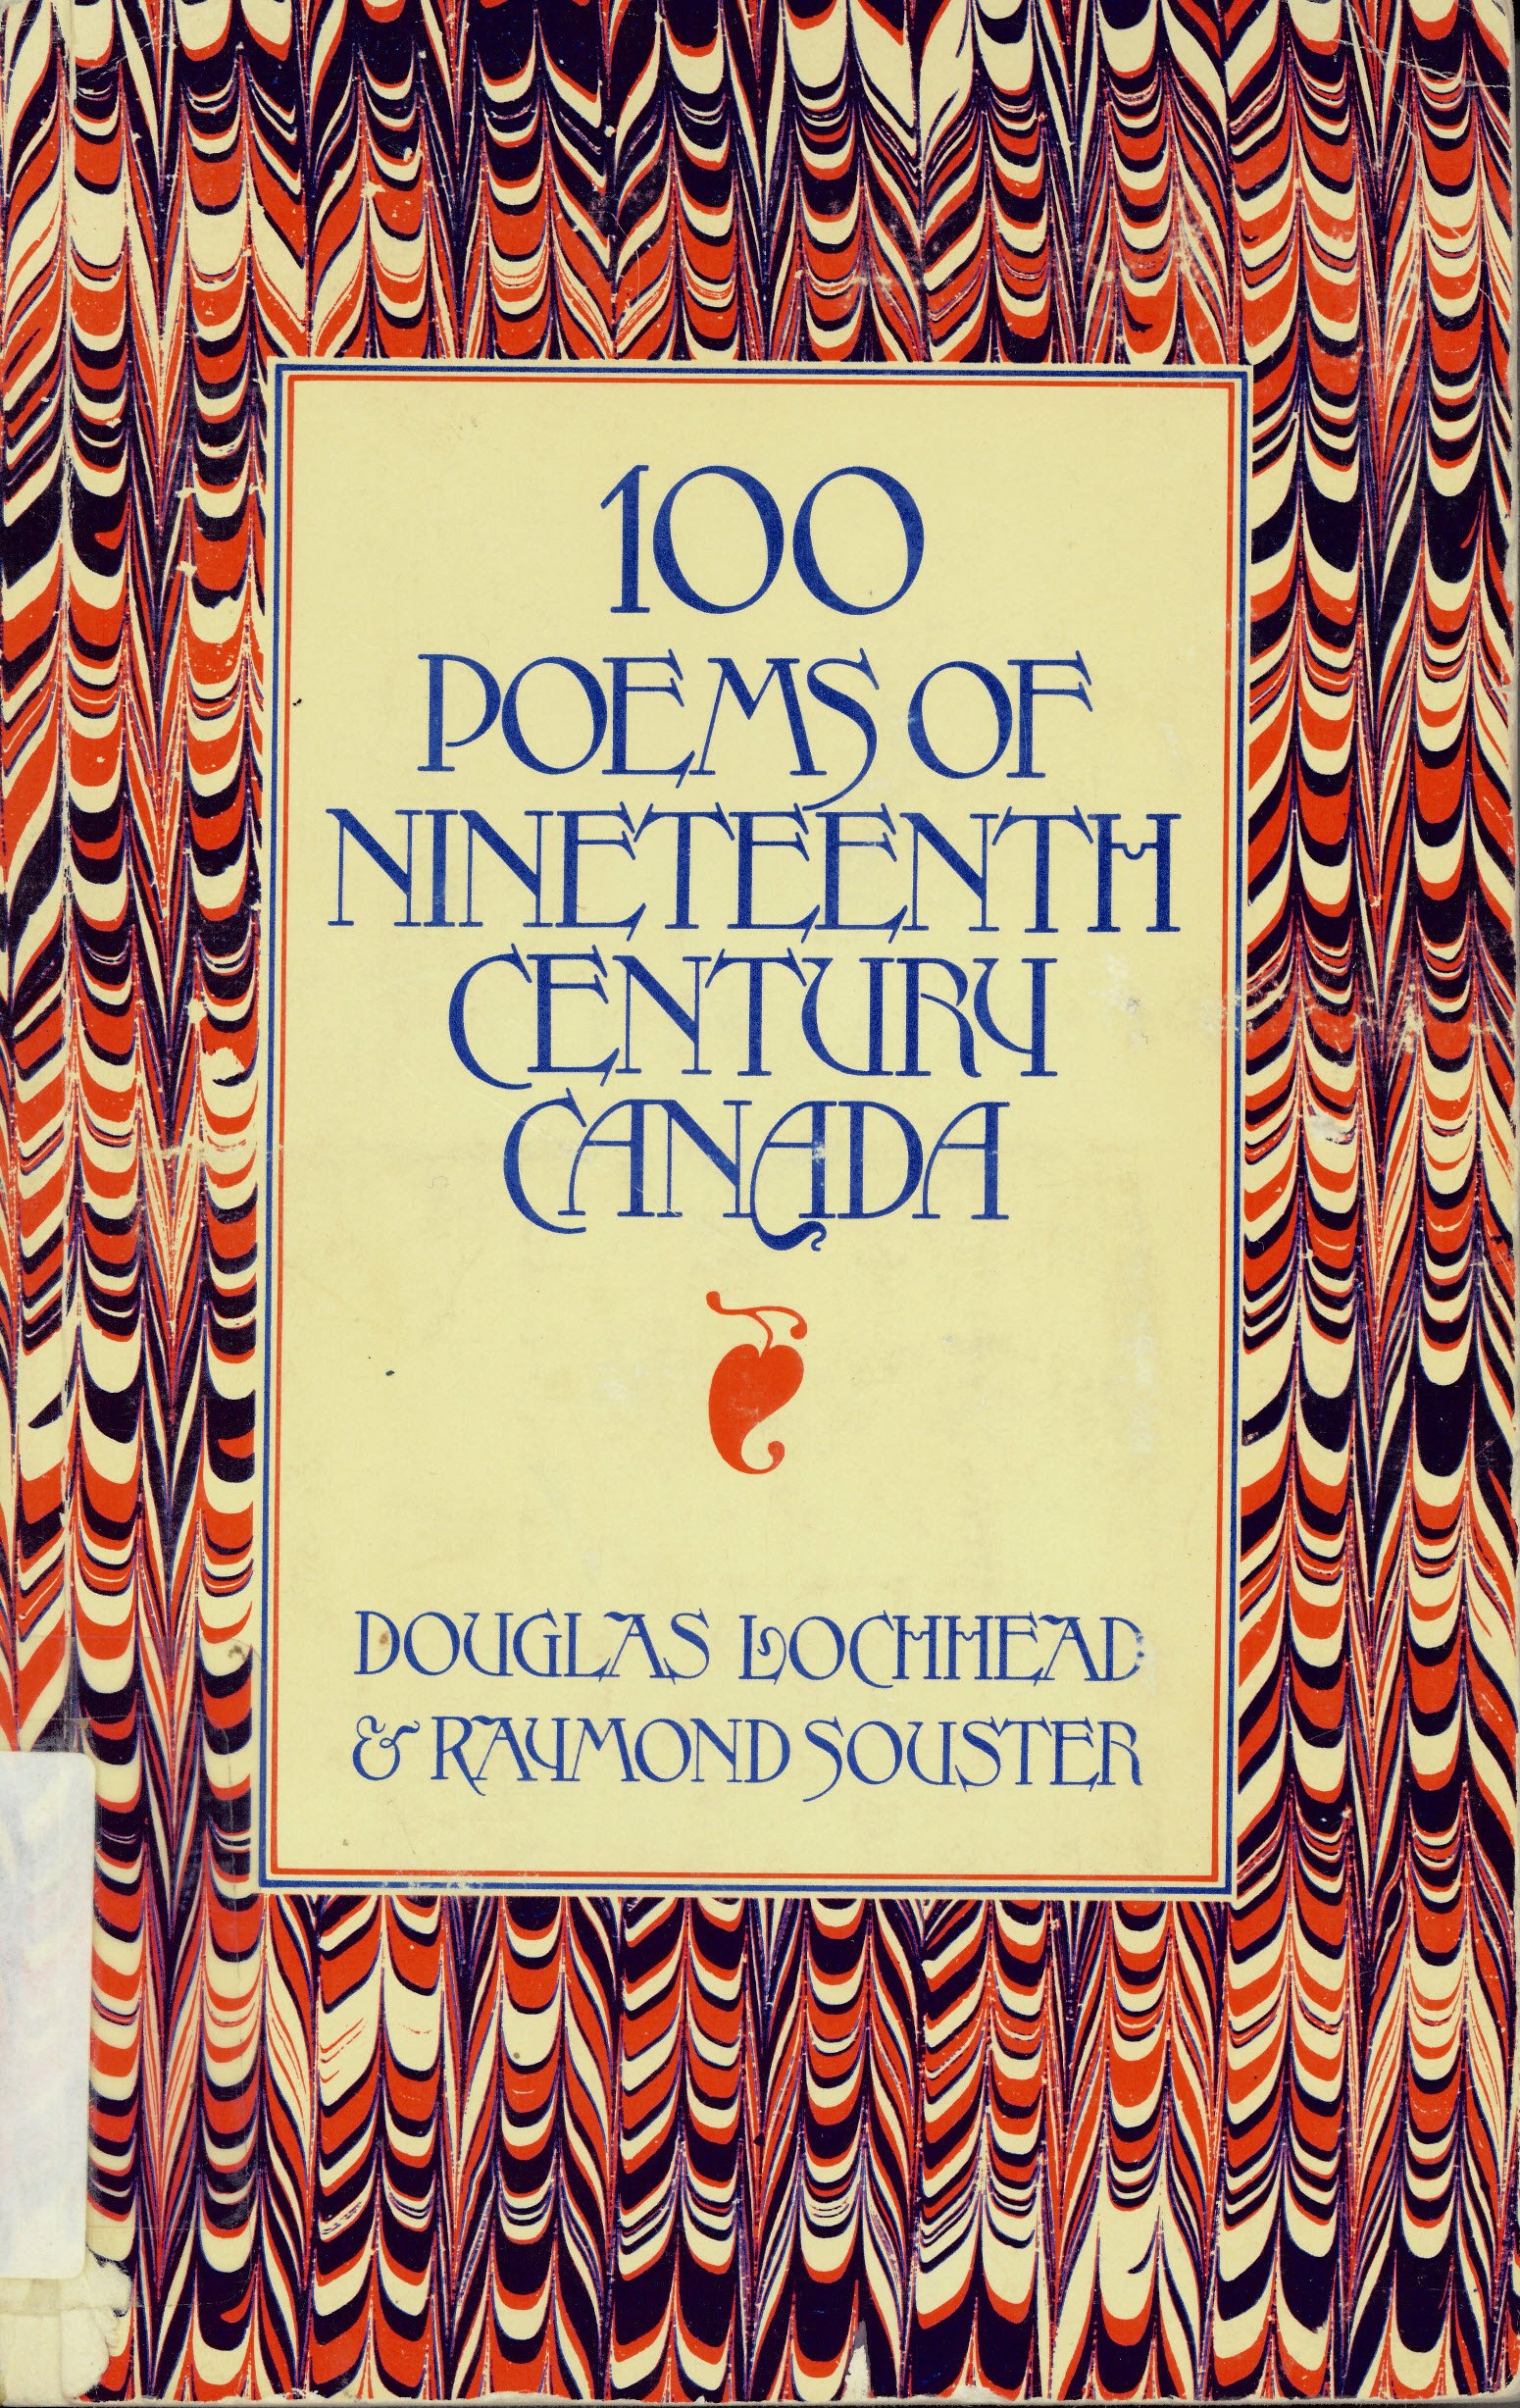 100 poems of nineteenth century Canada